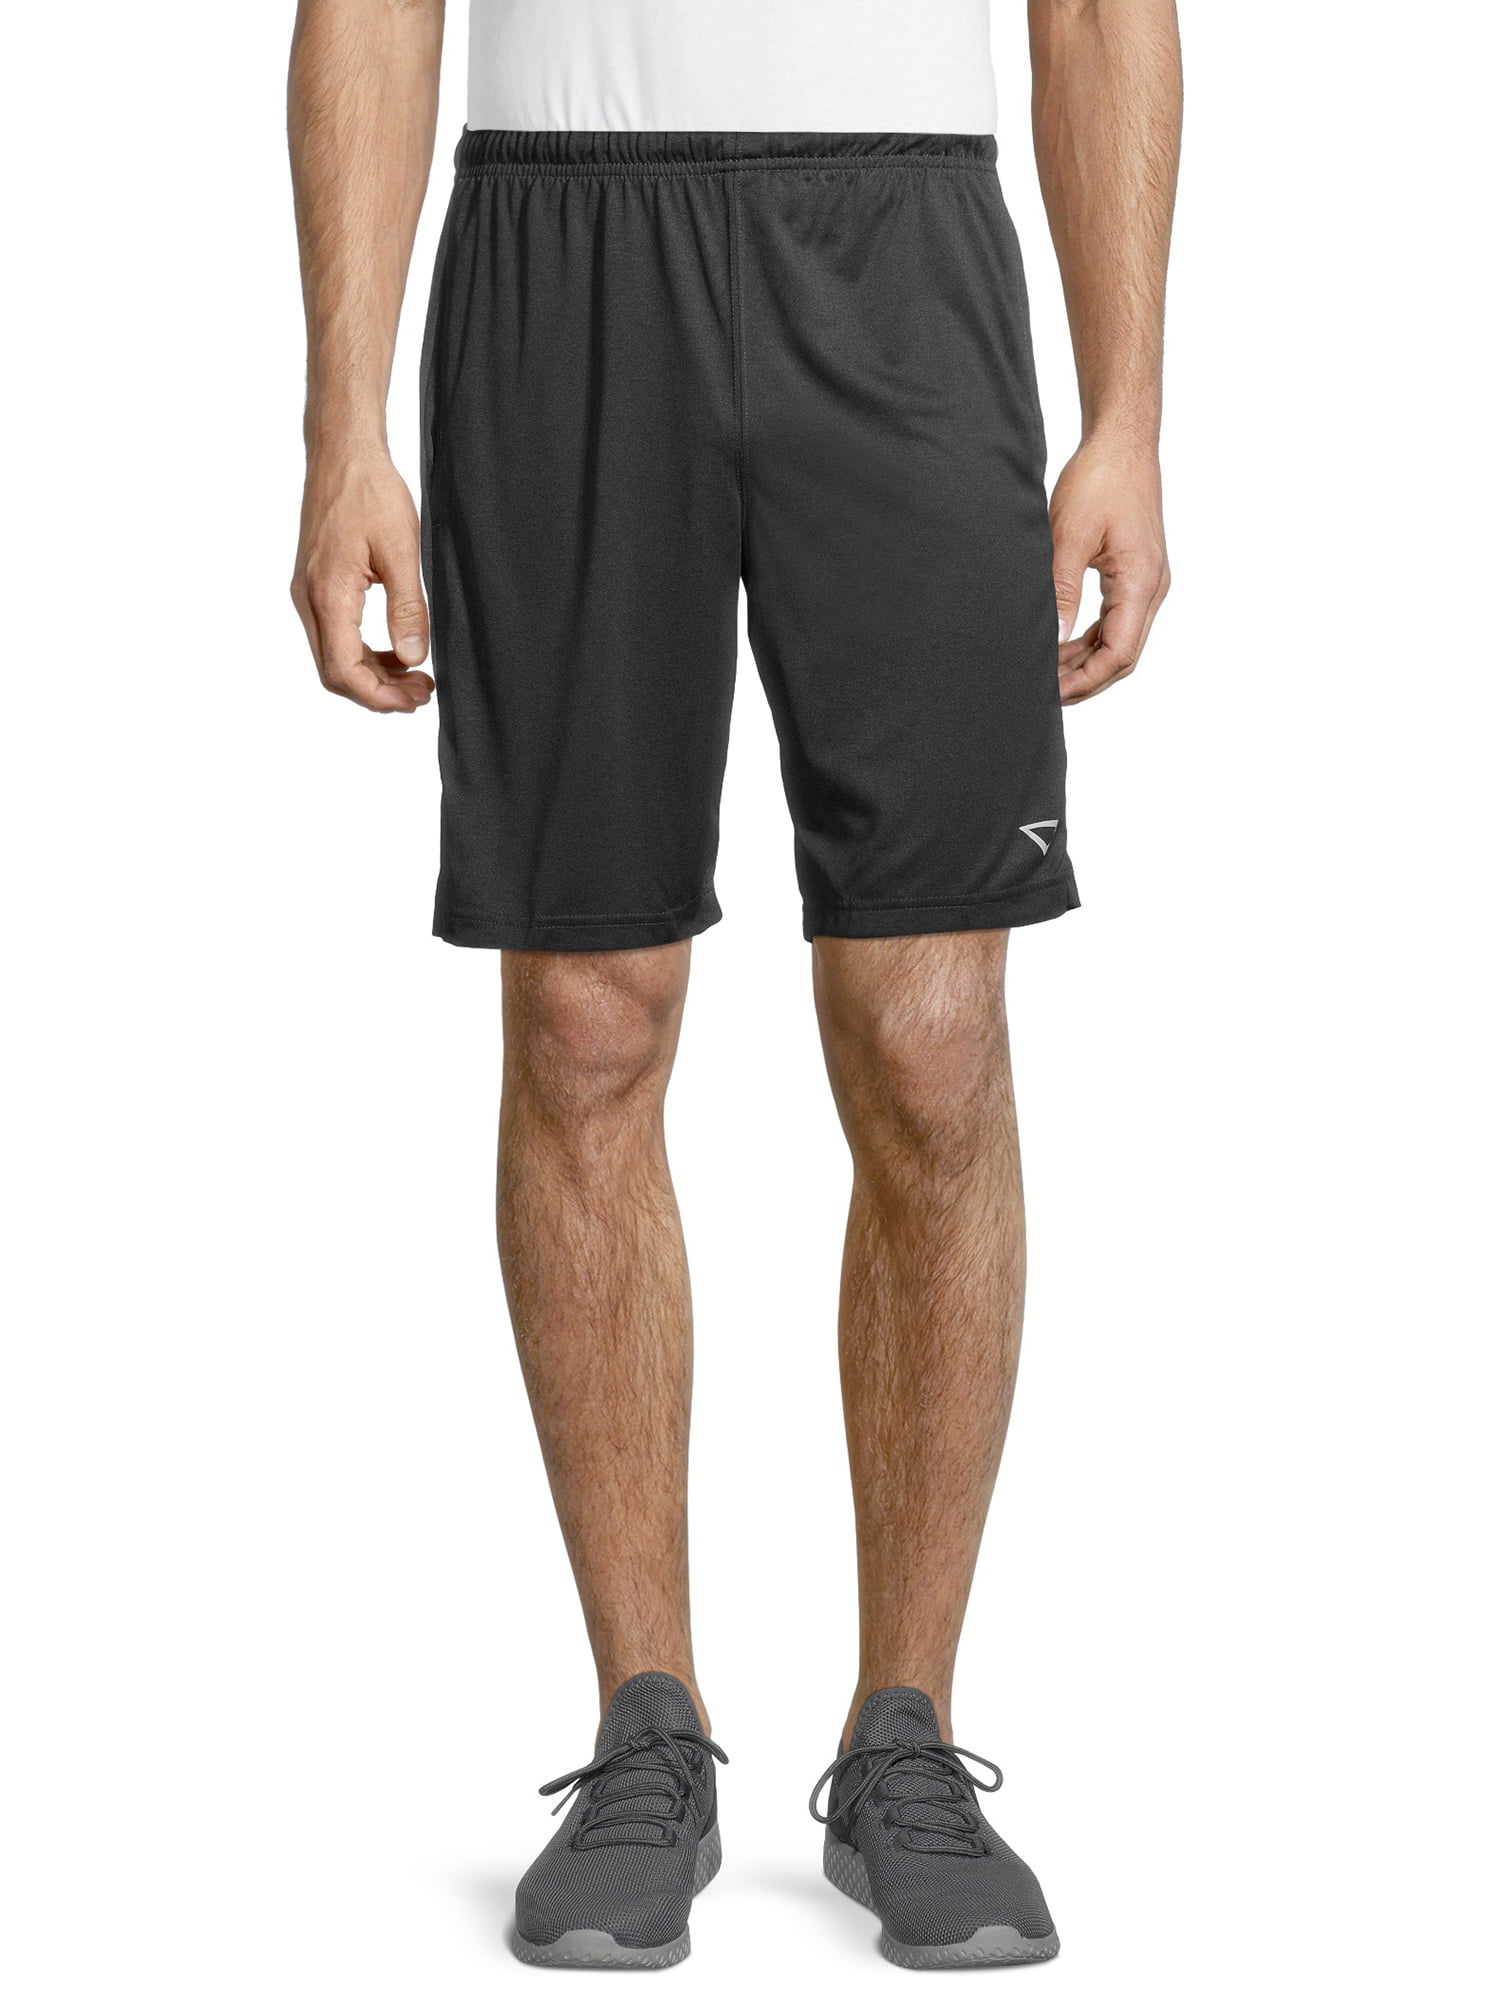 Cheetah Men's Voyager Athletic Shorts - Walmart.com